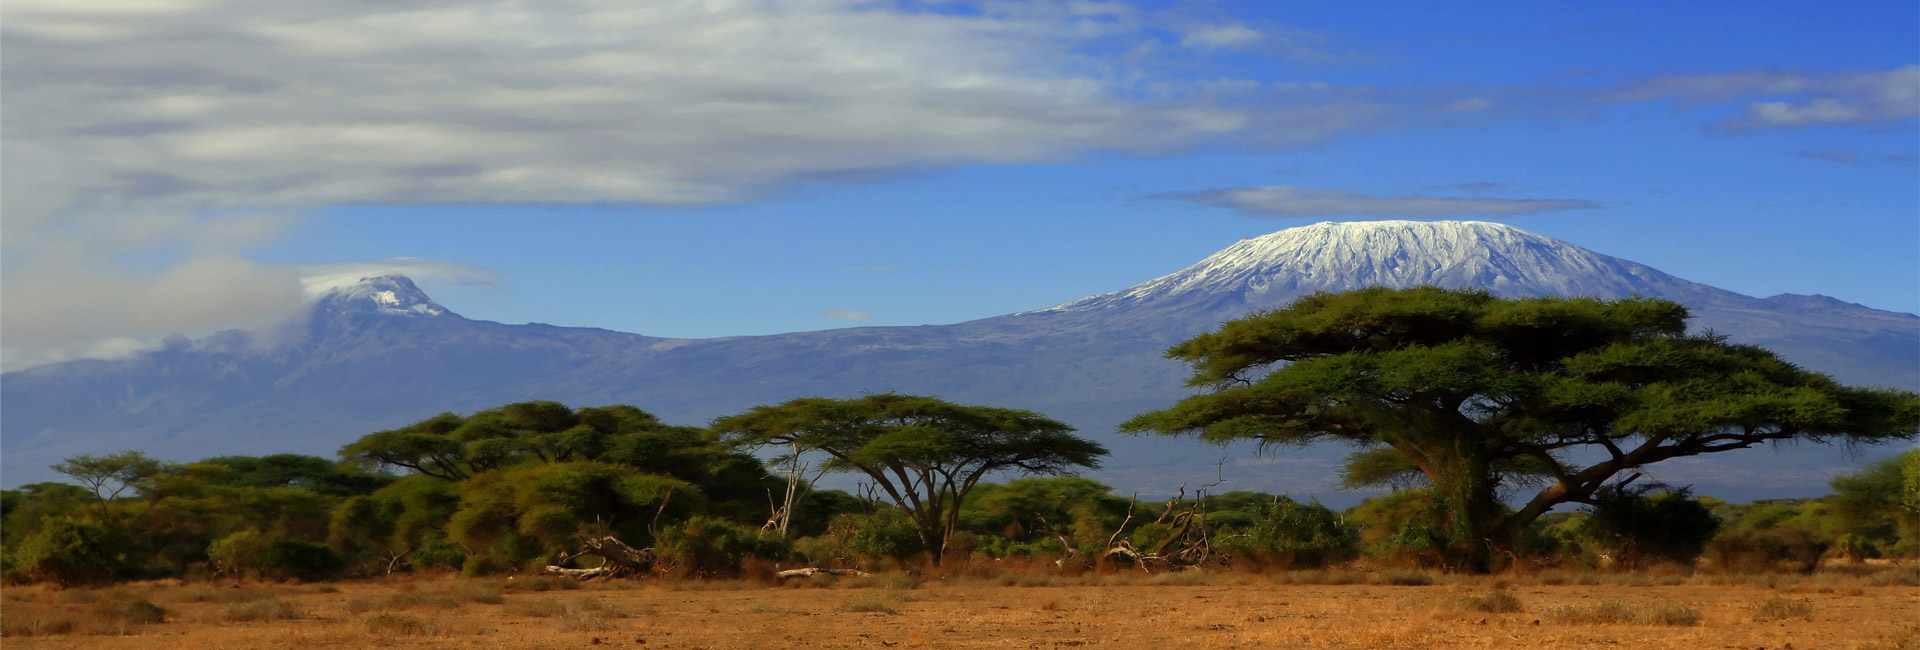 Kilimandscharo – 5.892 m, Kenia